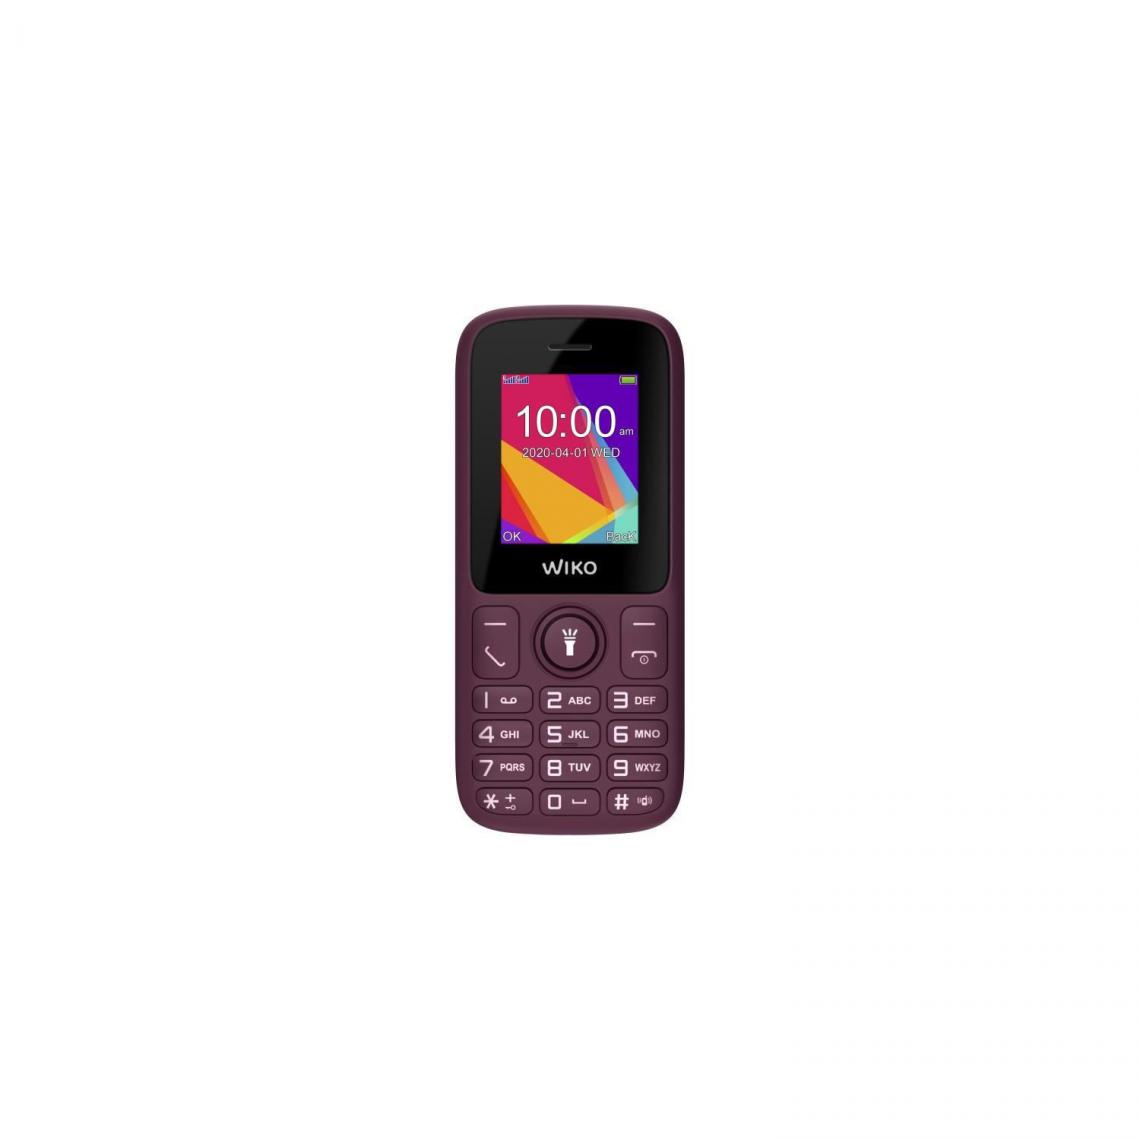 Wiko - SMARTPHONE WIKO F100 LS PURPLE - Smartphone Android